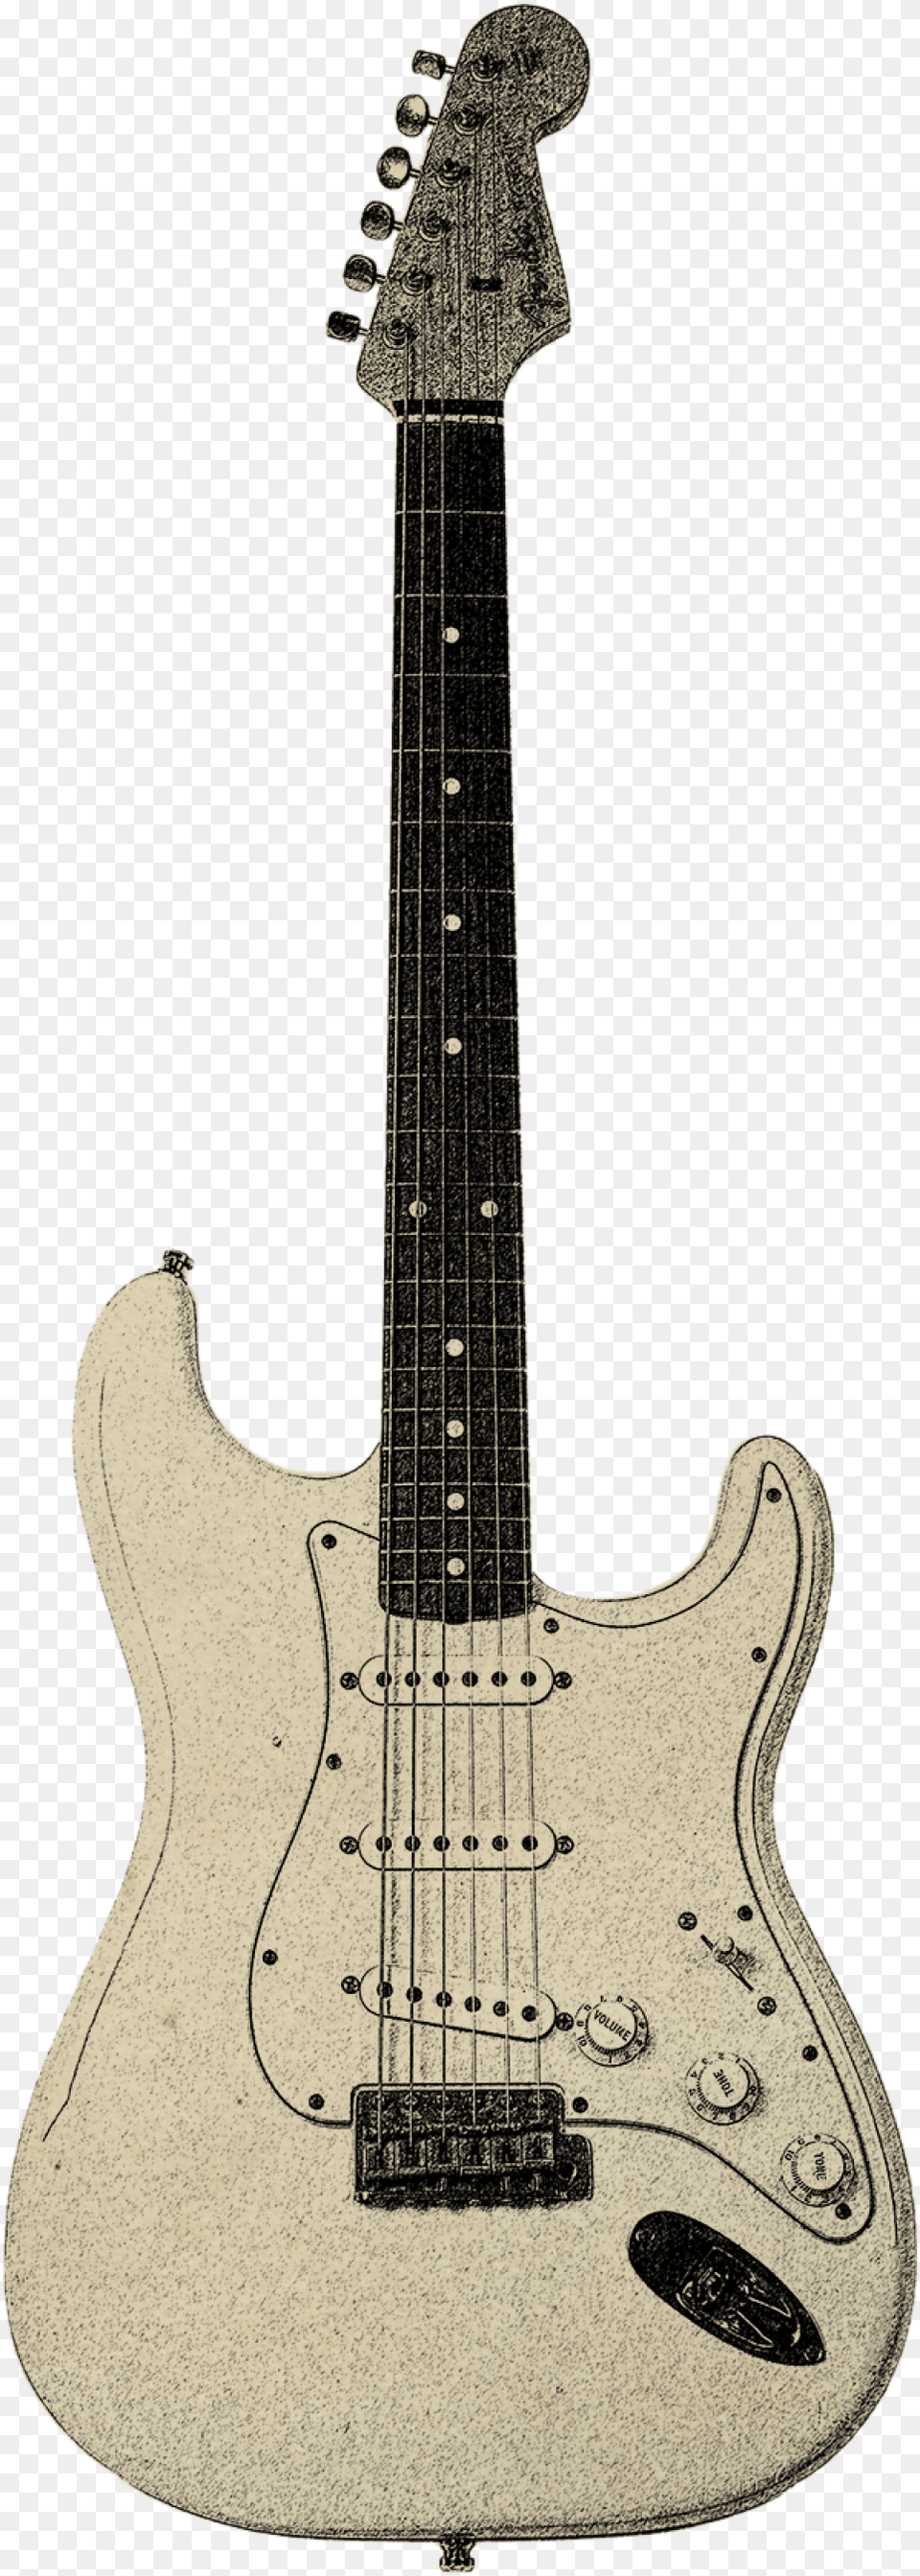 Fender Stratocaster Road Worn, Bass Guitar, Guitar, Musical Instrument Png Image